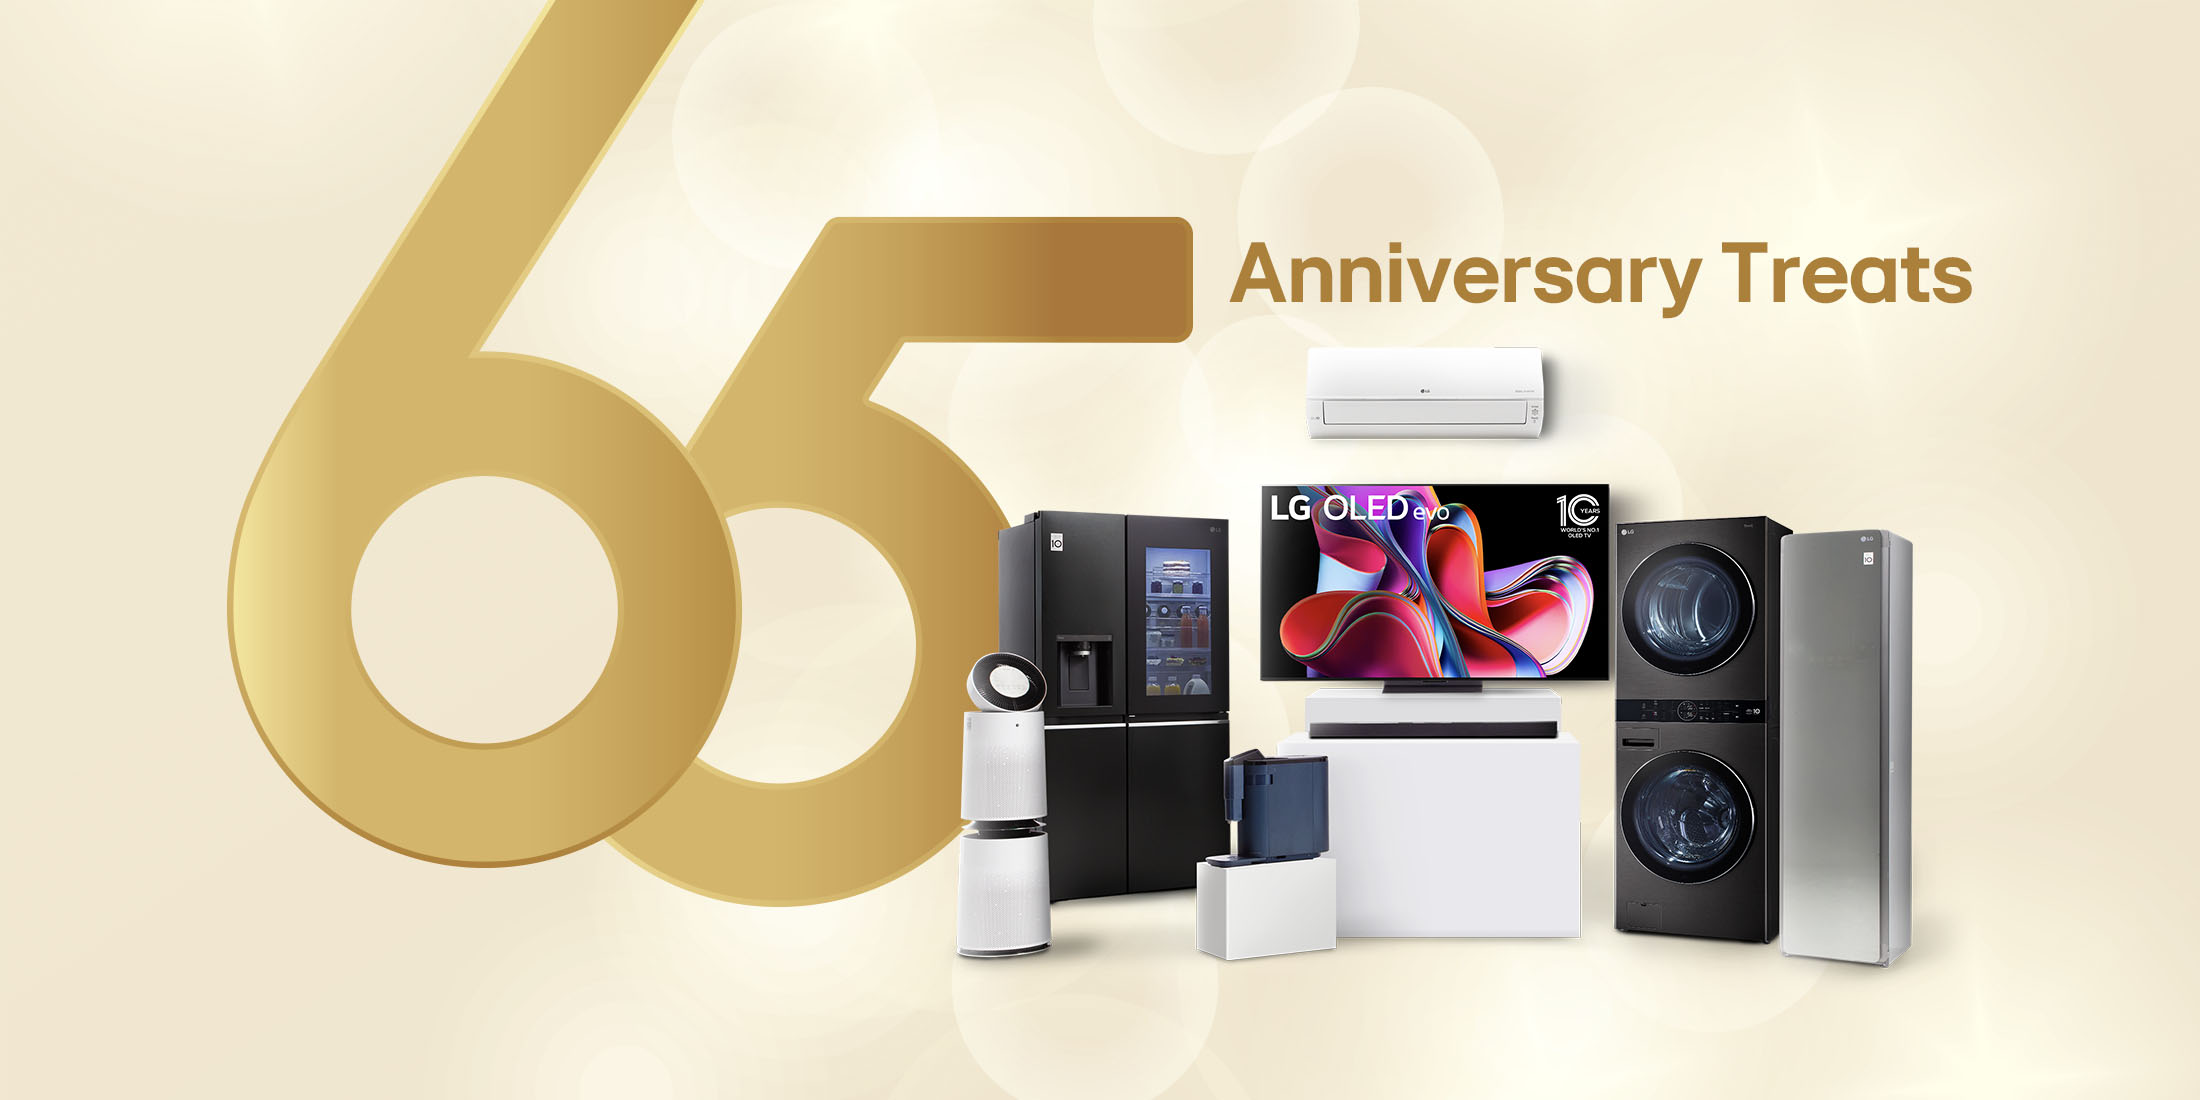 LG 65th Anniversary Treats Promotion